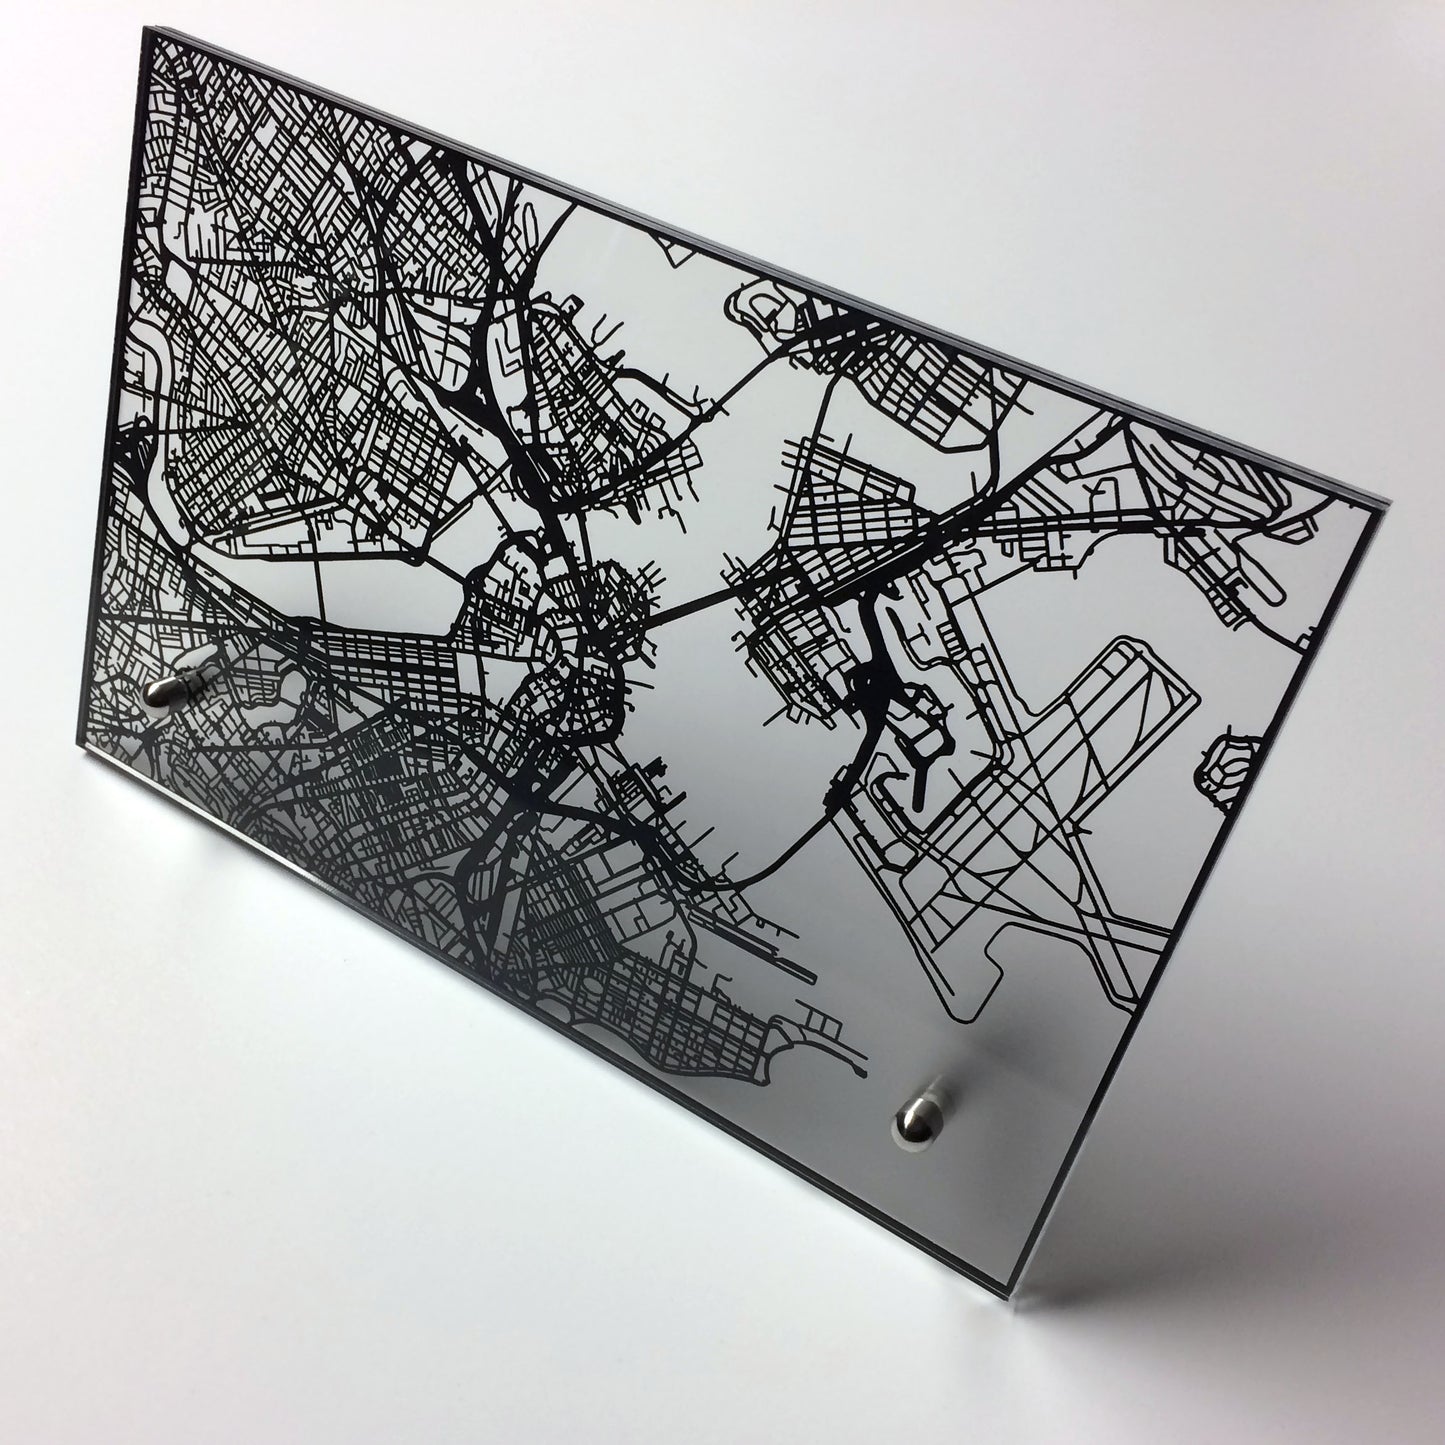 Boston laser cut desk map - CarbonLight